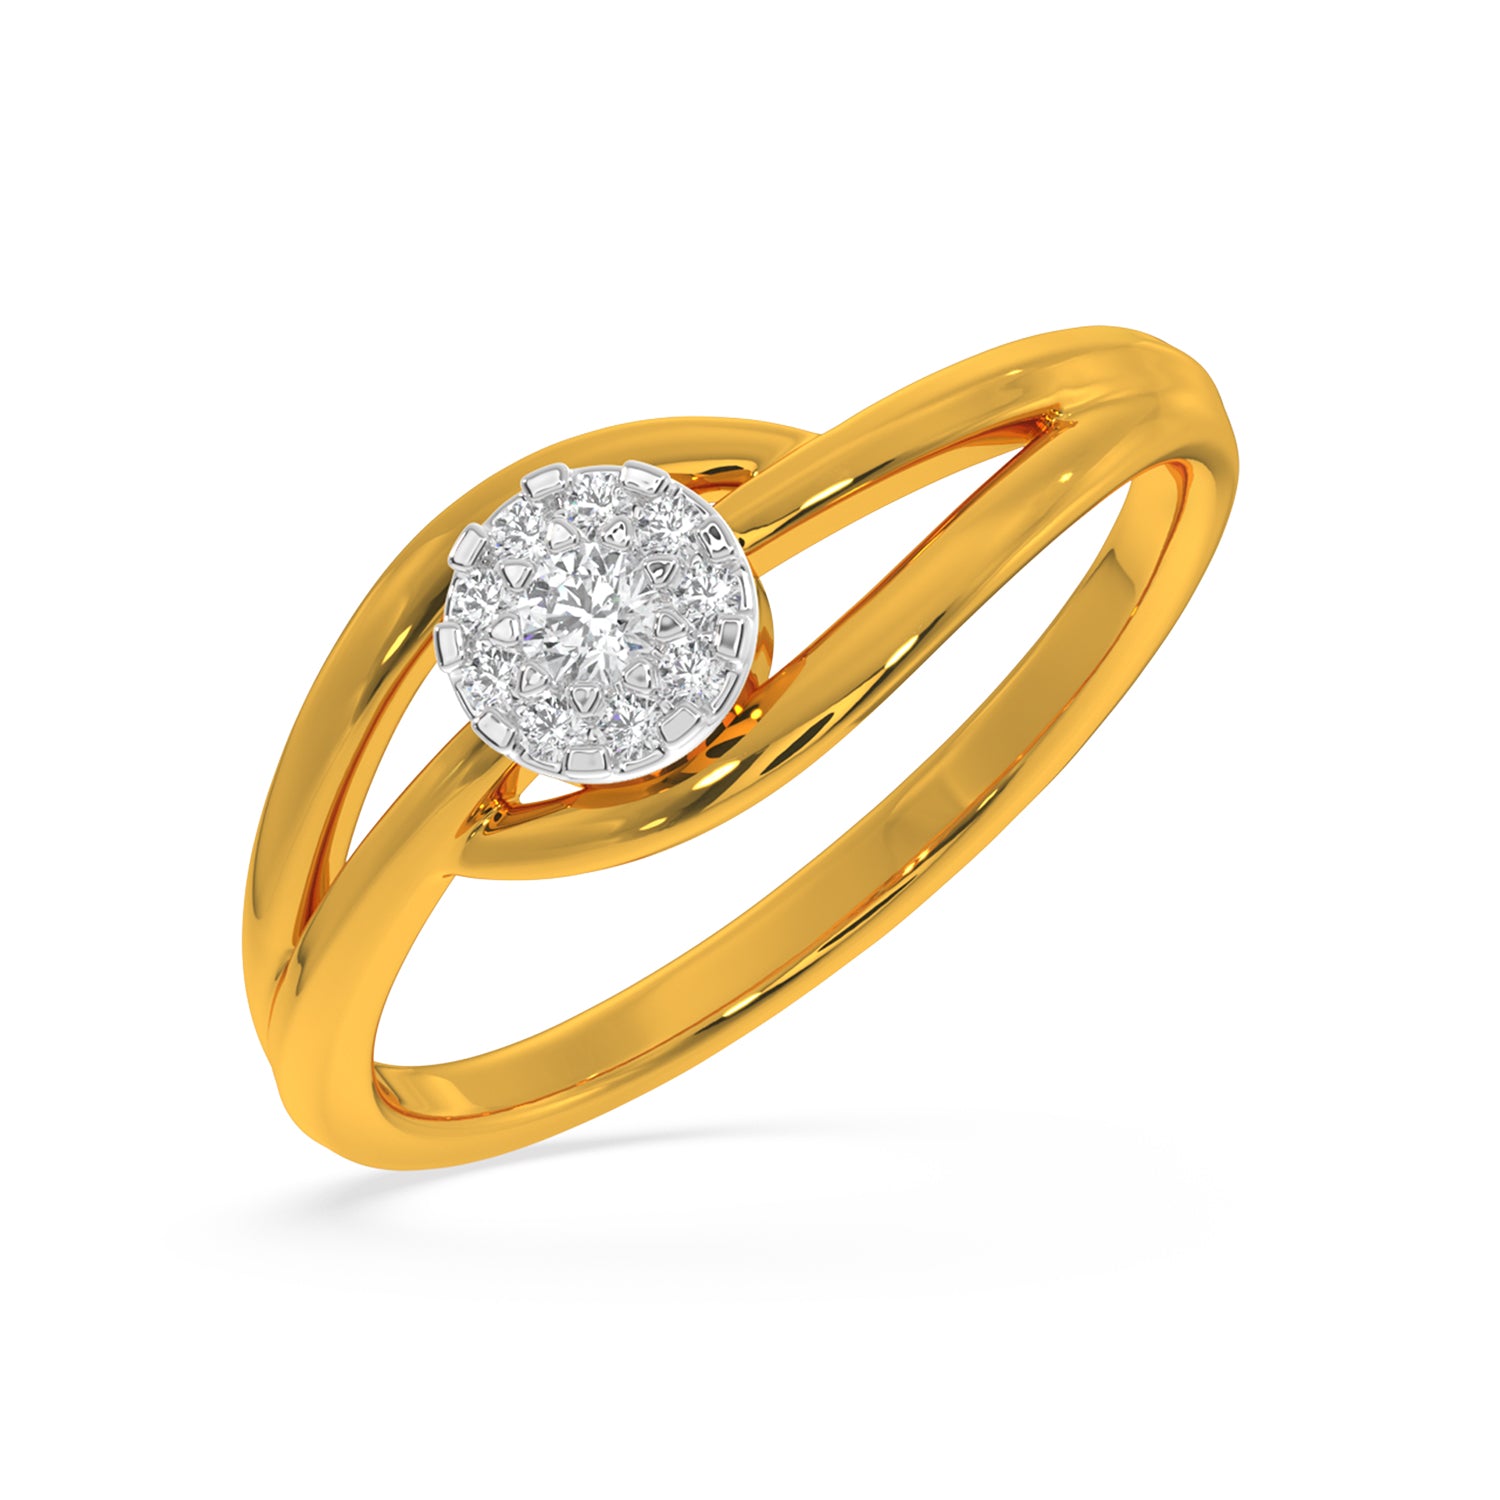 Kaleina Diamond Wedding Ring For Her Online Jewellery Shopping